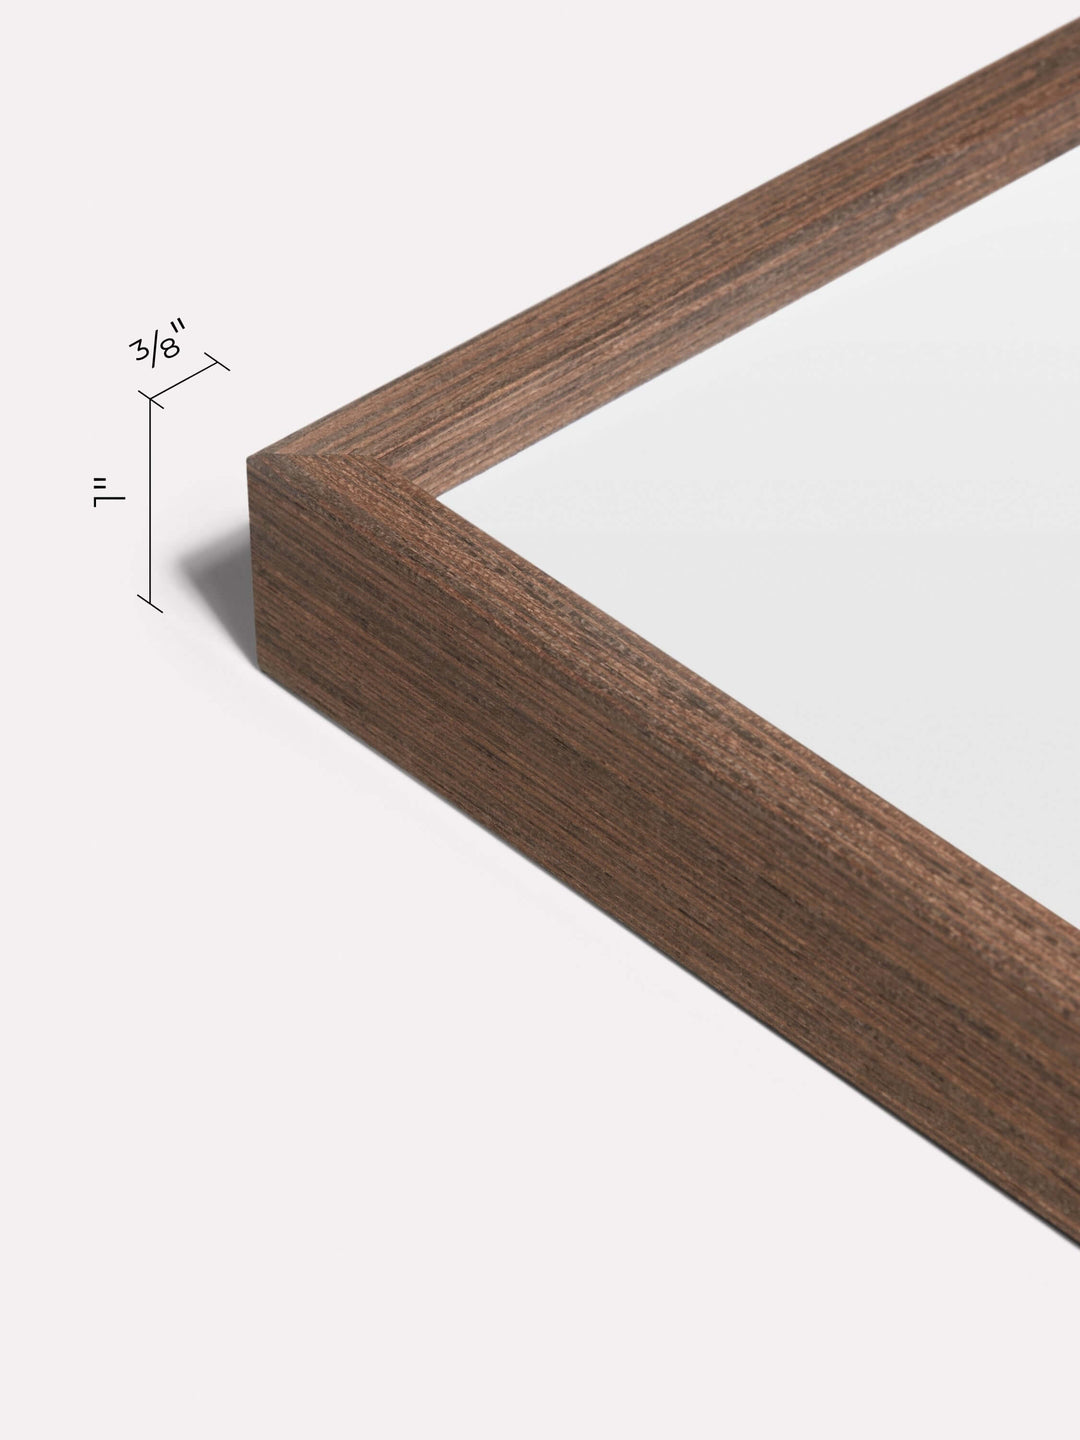 11x14-inch Thin Frame, Walnut - Close-up view